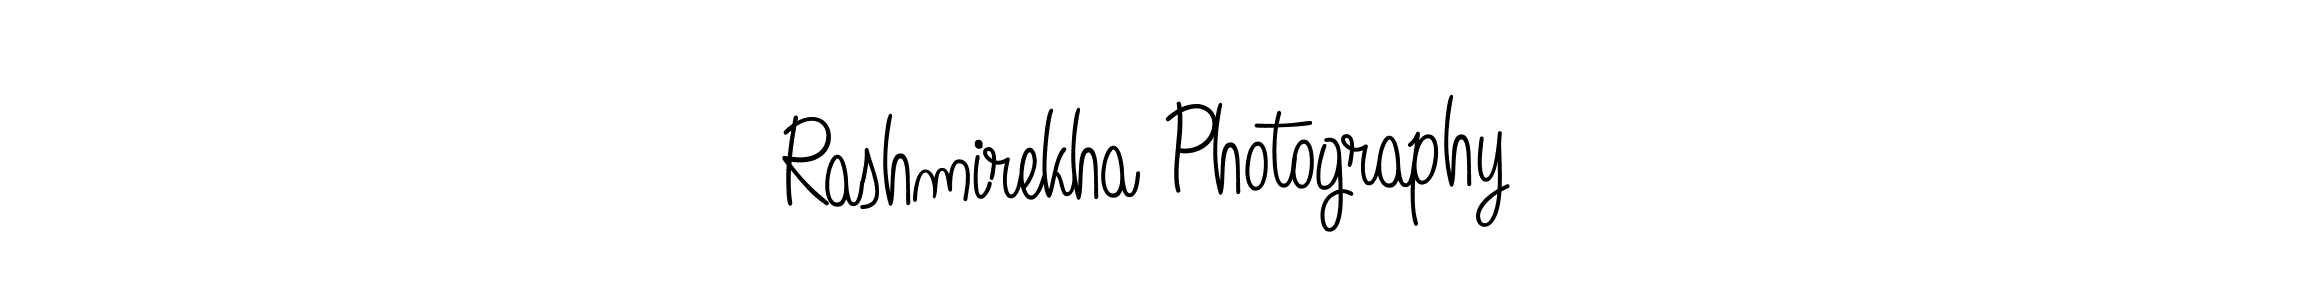 Best and Professional Signature Style for Rashmirekha Photography. Angelique-Rose-font-FFP Best Signature Style Collection. Rashmirekha Photography signature style 5 images and pictures png